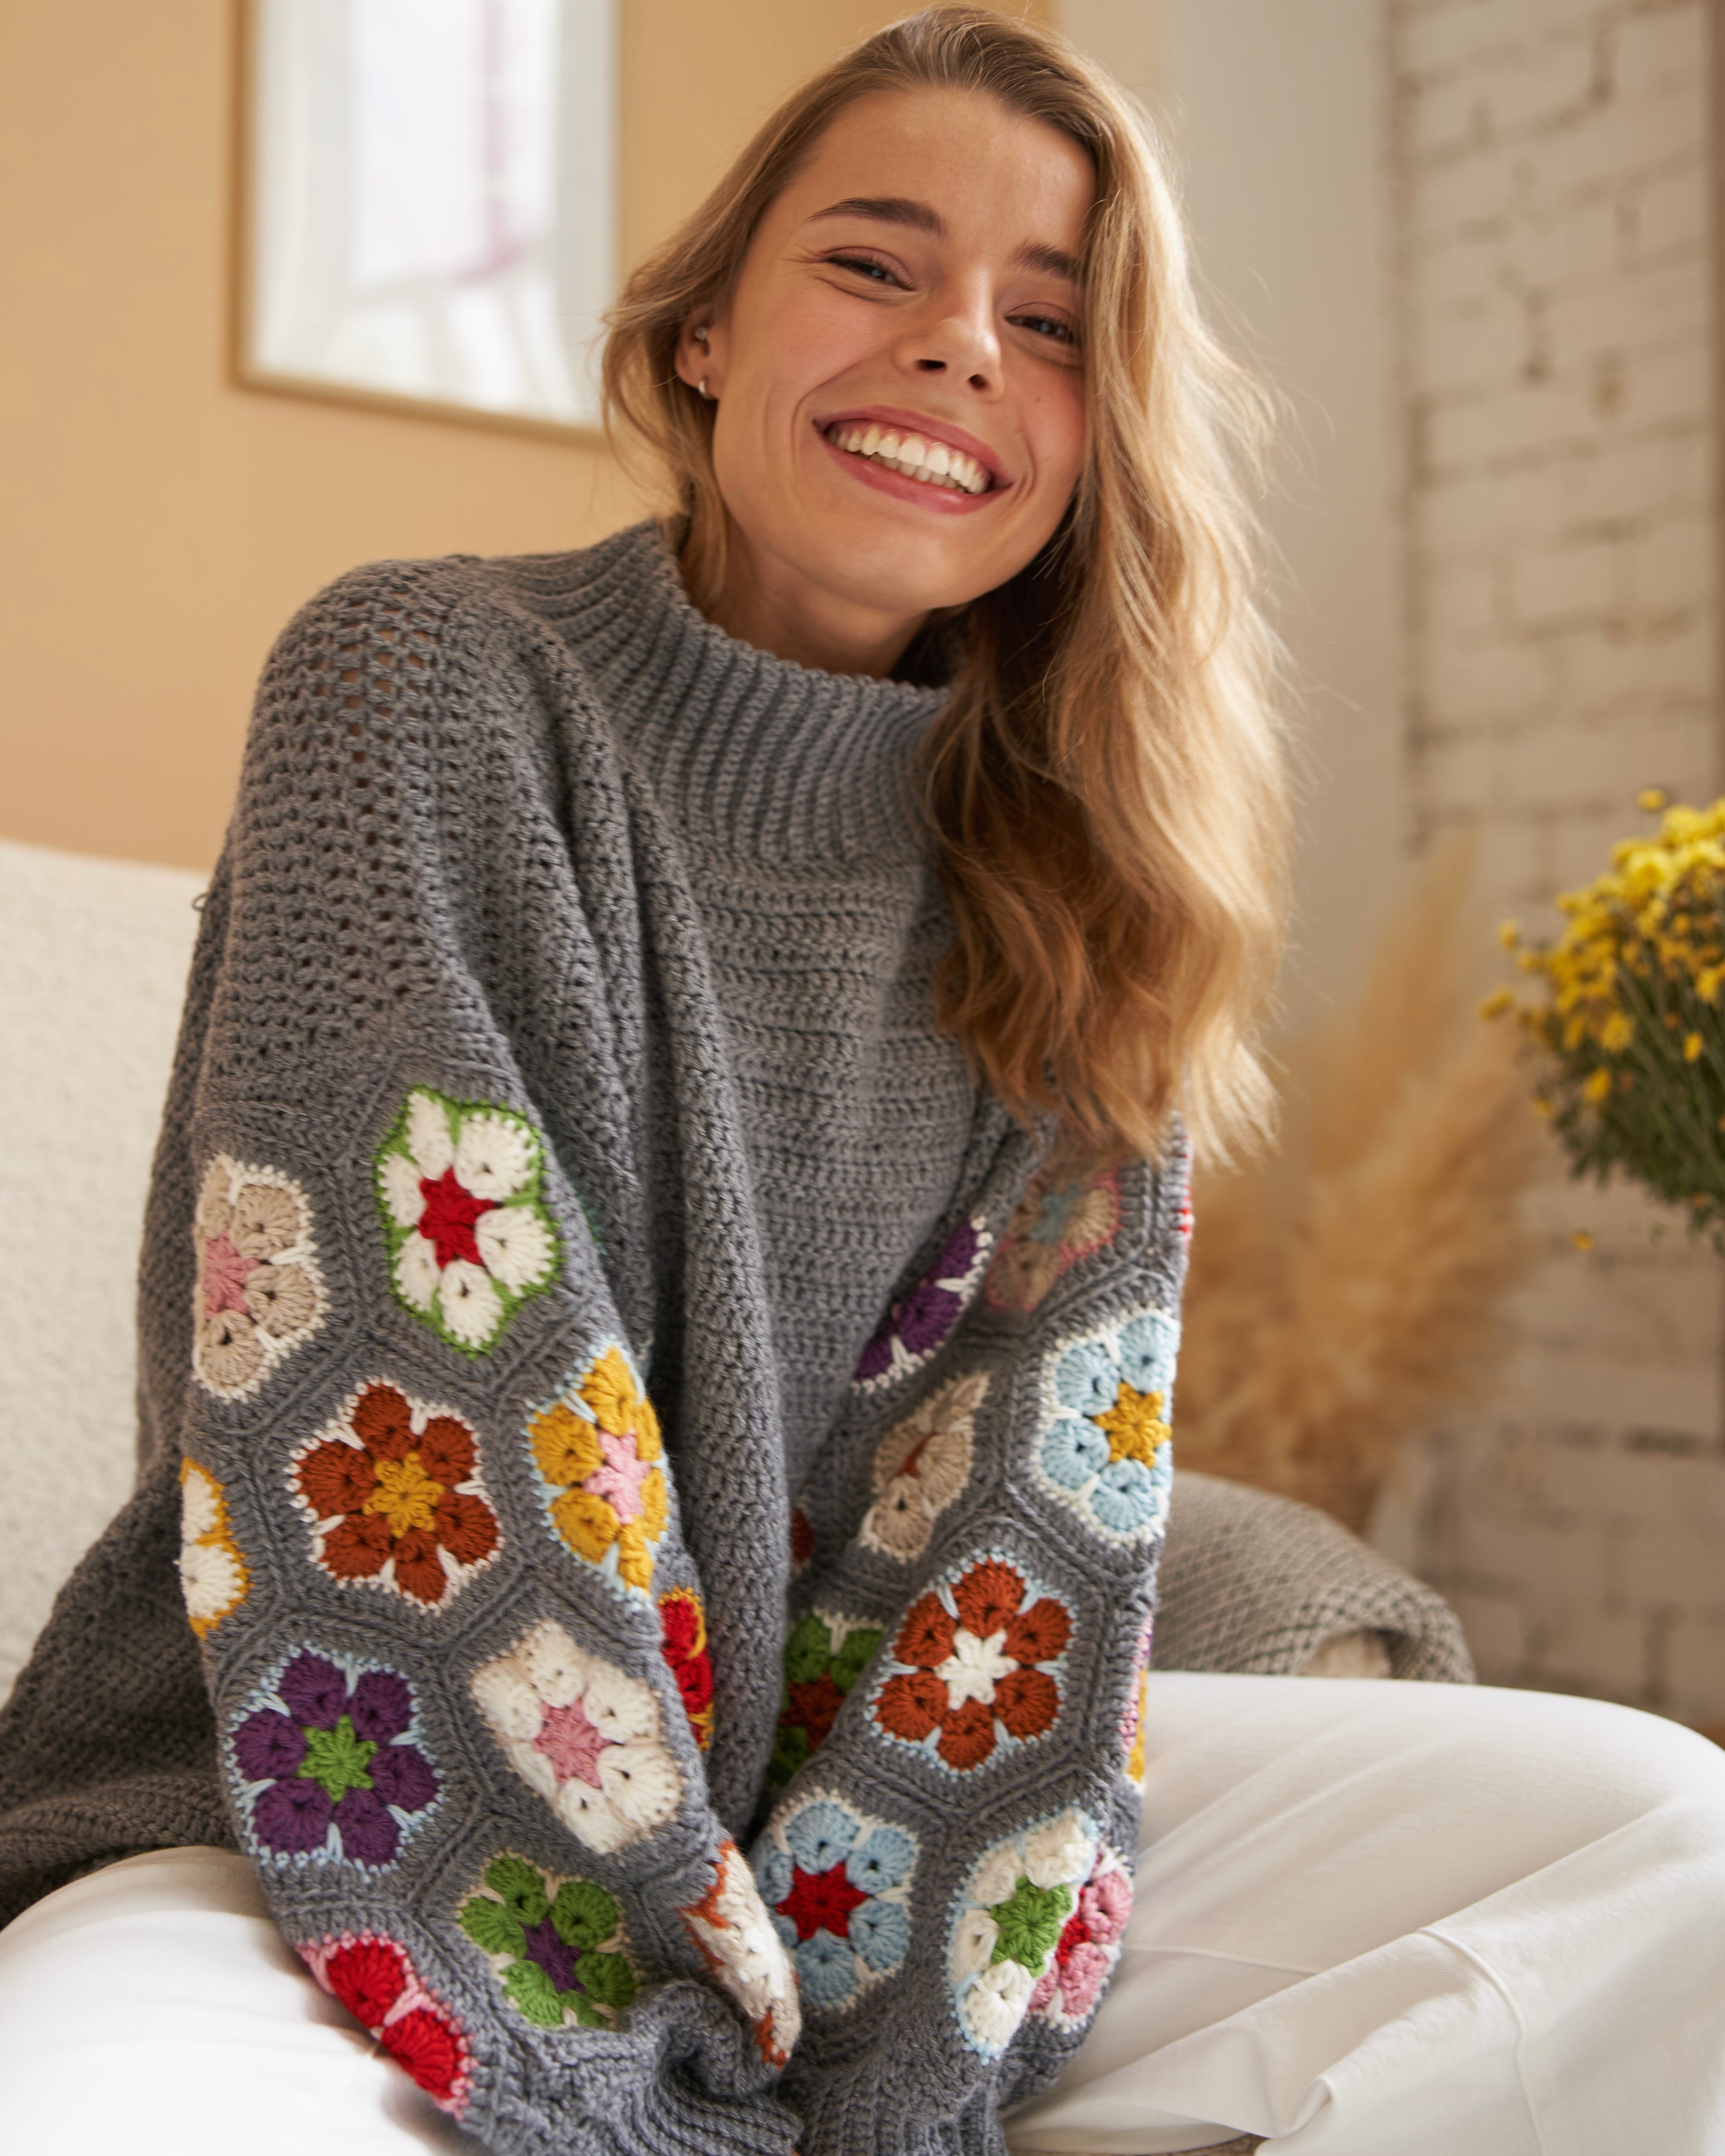 Crochet African Flower sweater PDF Pattern (instant download)